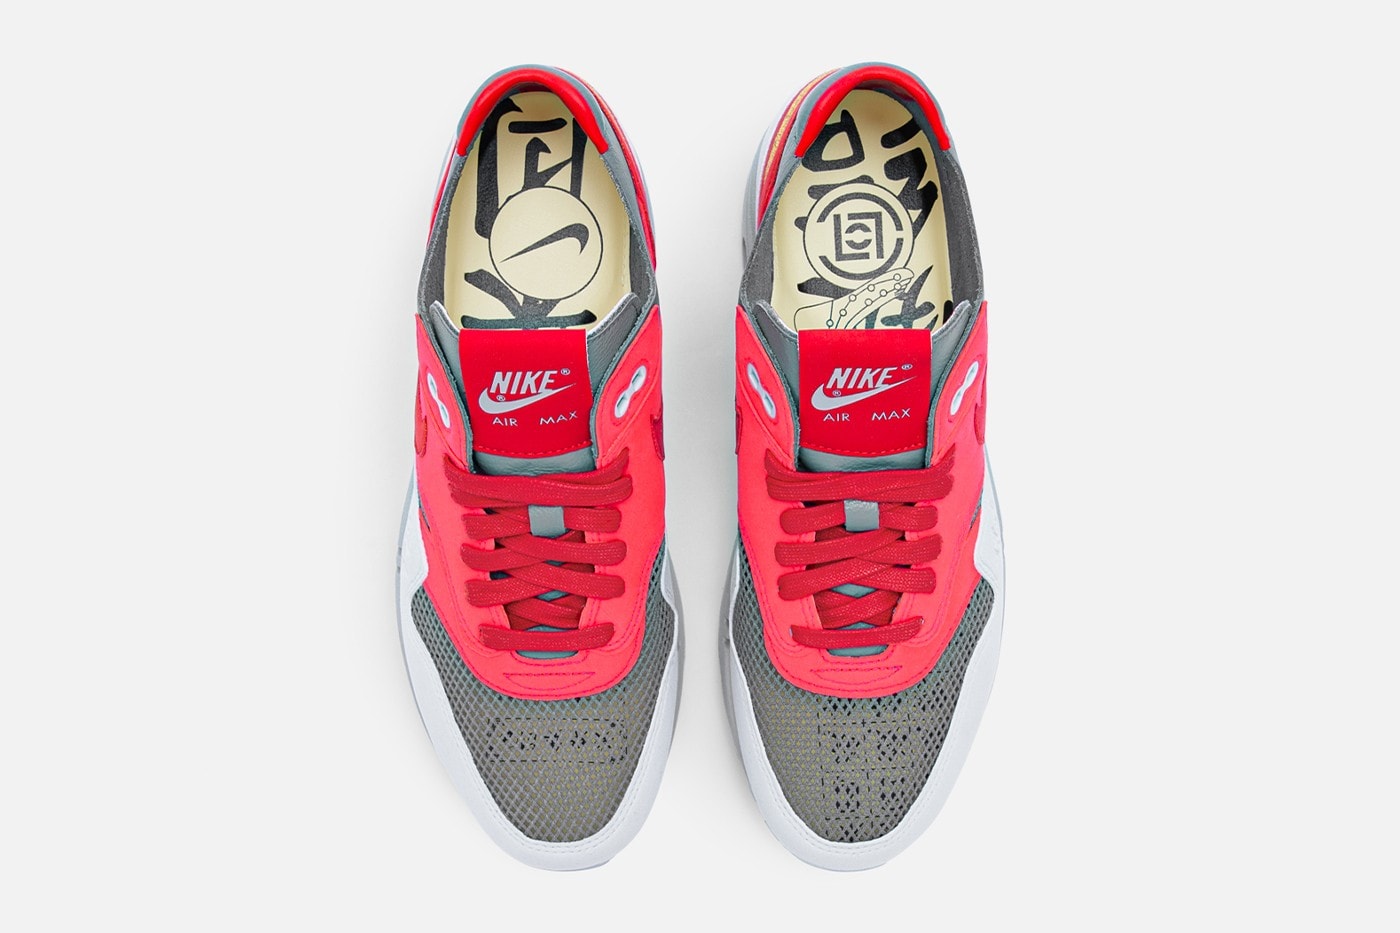 CLOT x Nike Air Max 1 最新聯名配色「K.O.D. Solar Red」正式登場